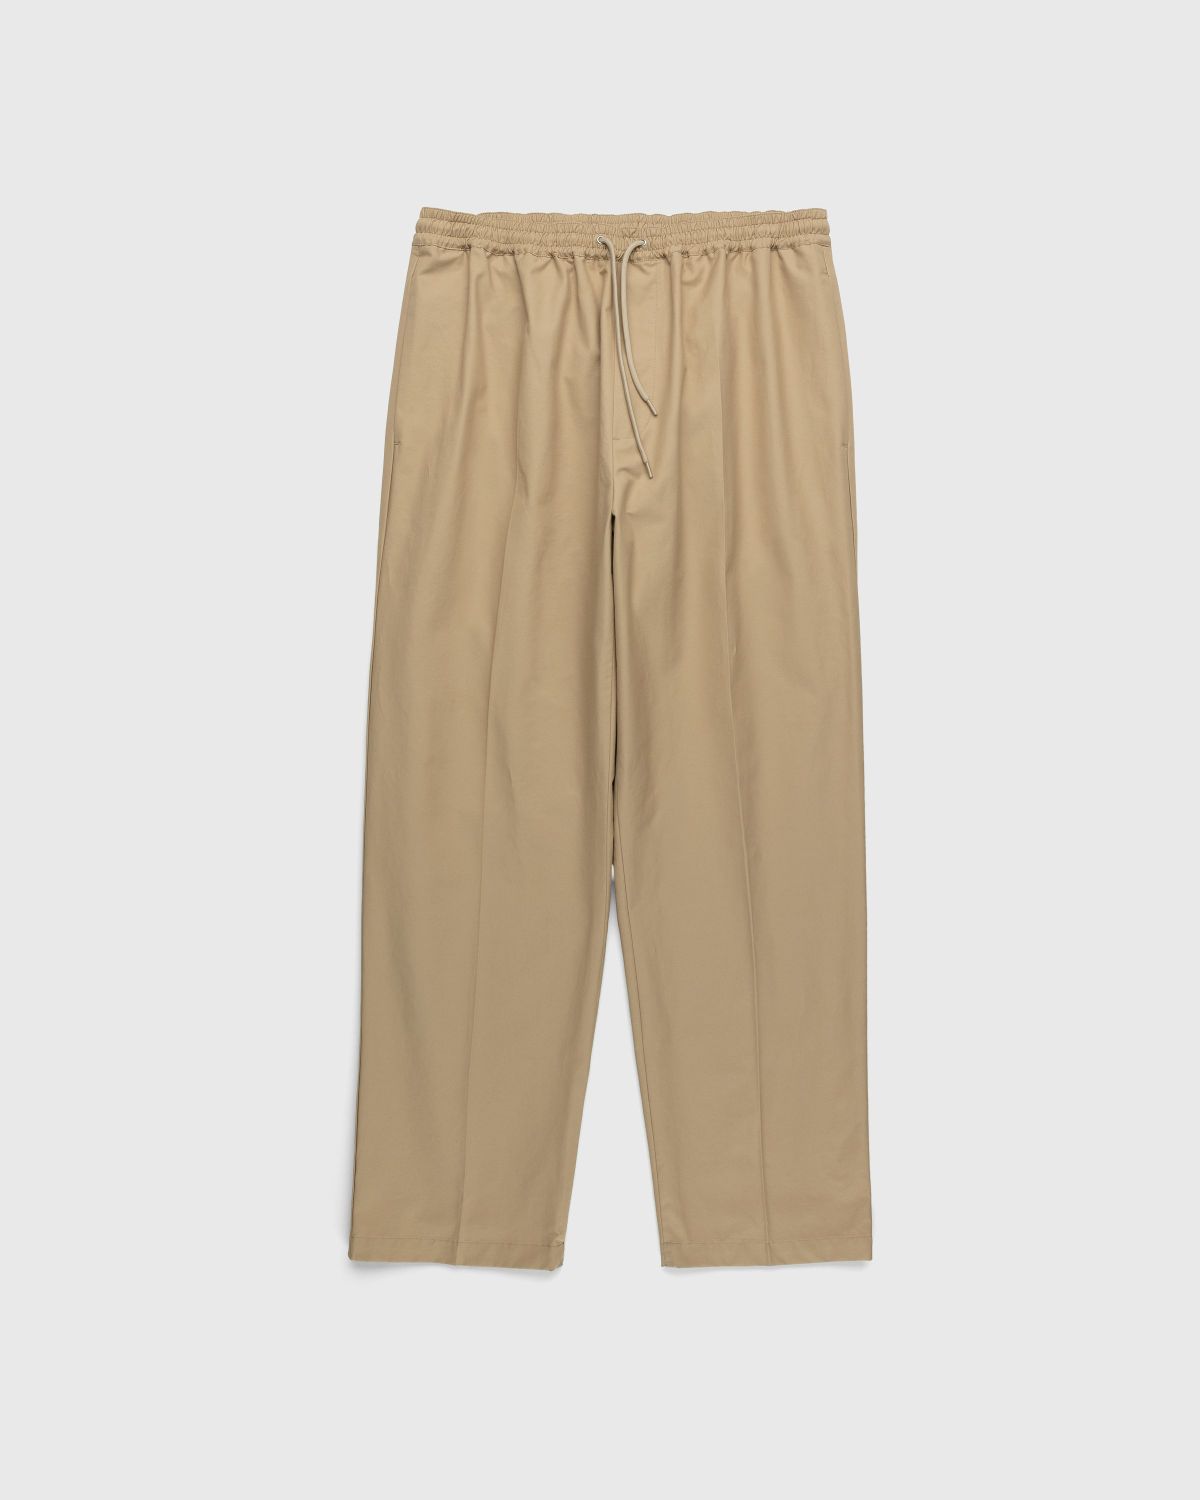 Highsnobiety – Cotton Nylon Elastic Pants Beige - Trousers - Beige - Image 1